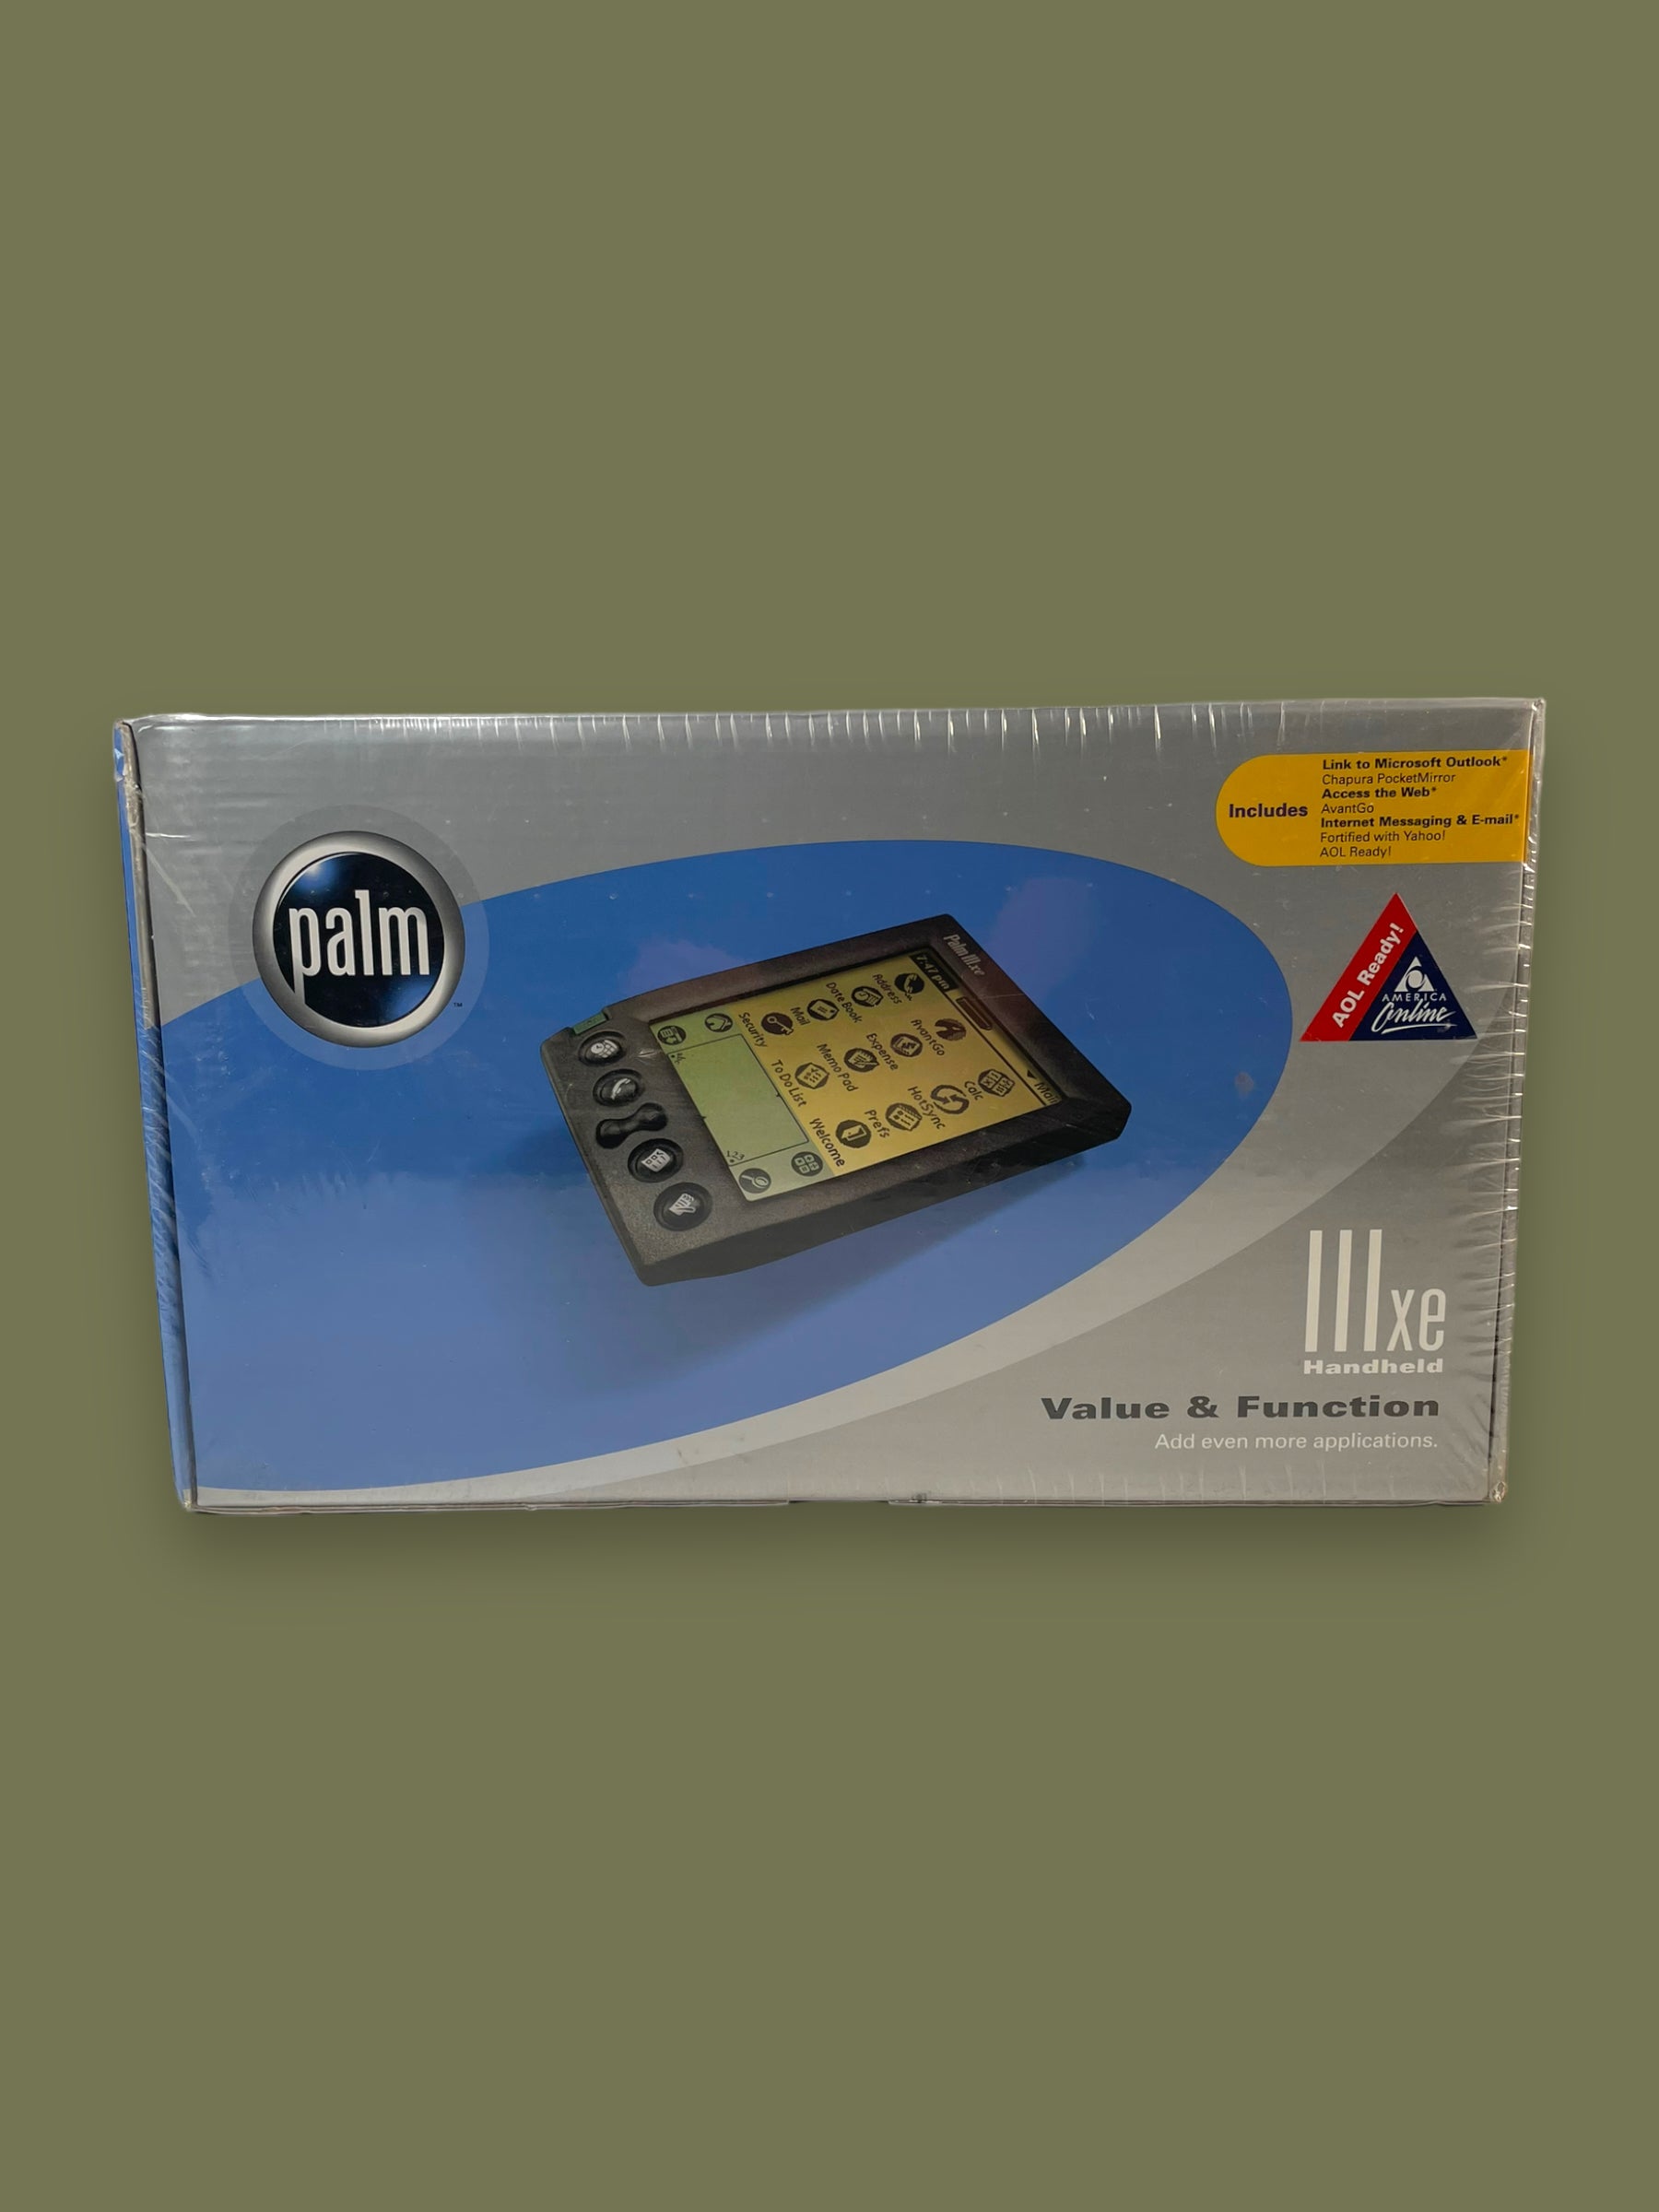 Palm Pilot IIIxe handheld PDA Device - Sealed